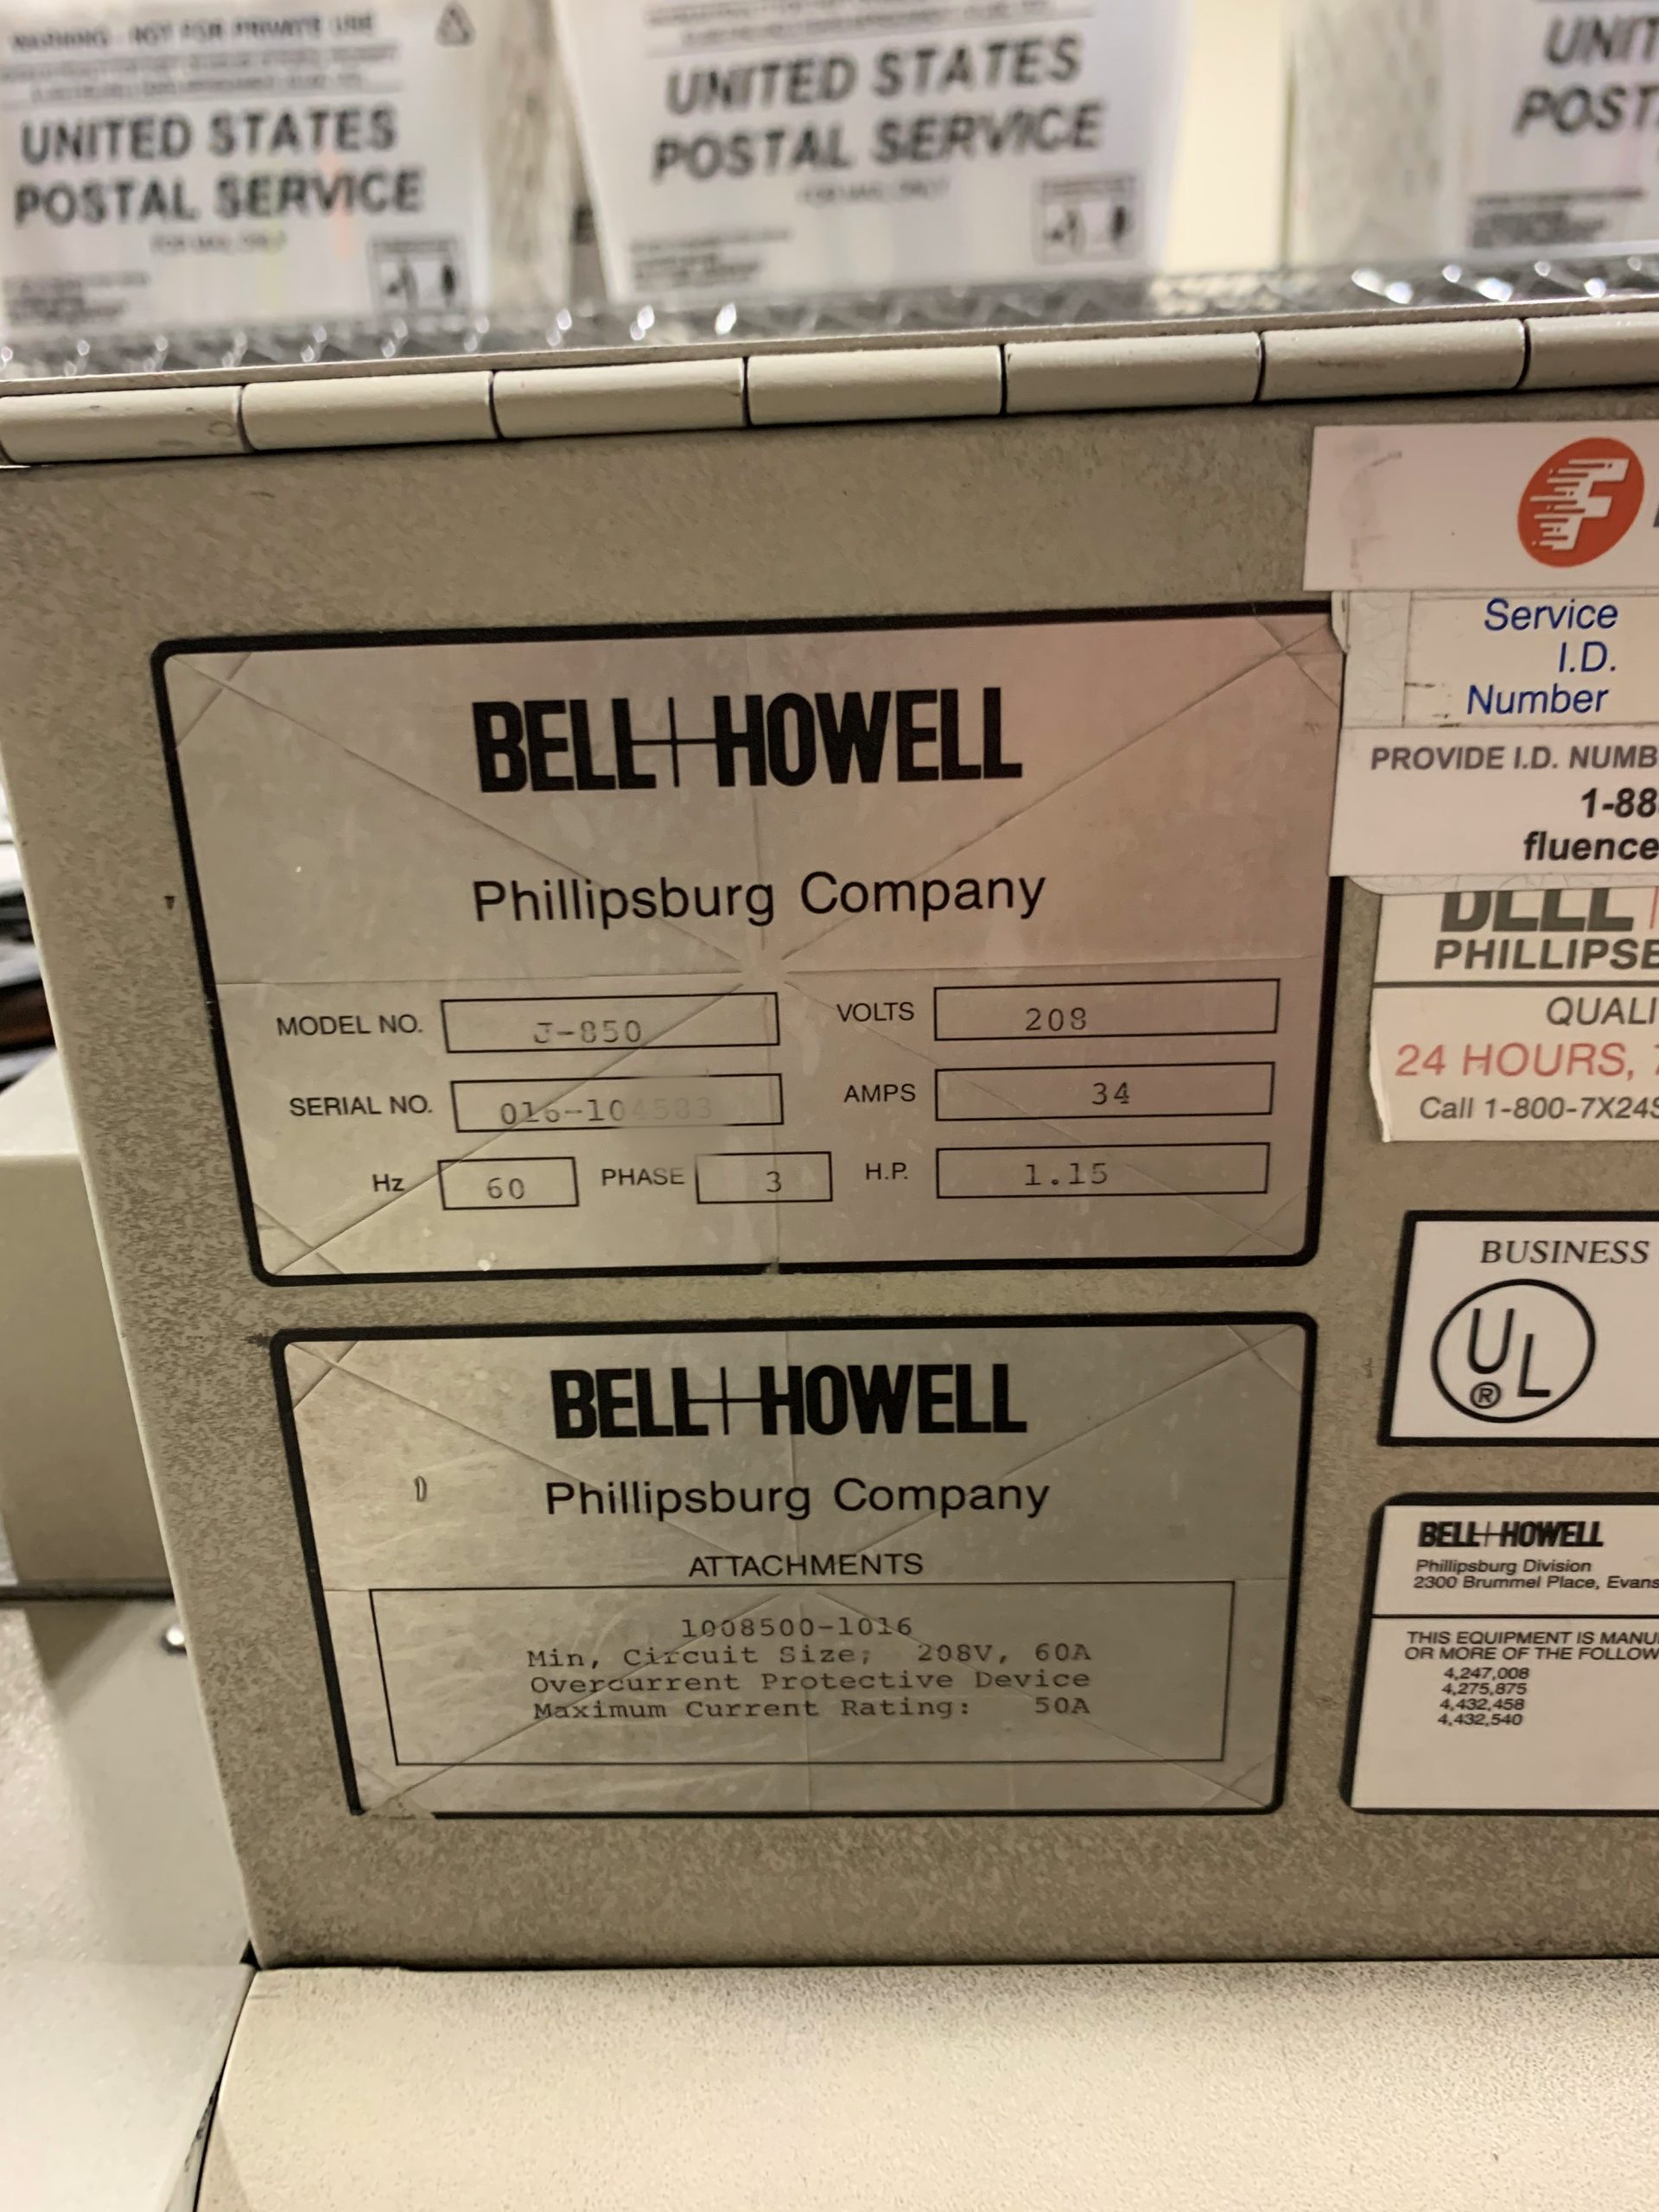 Bell+Howell Model J-850 16 Bins (pockets) Sorter (used) Item # UE-061821A (Rhode Island)